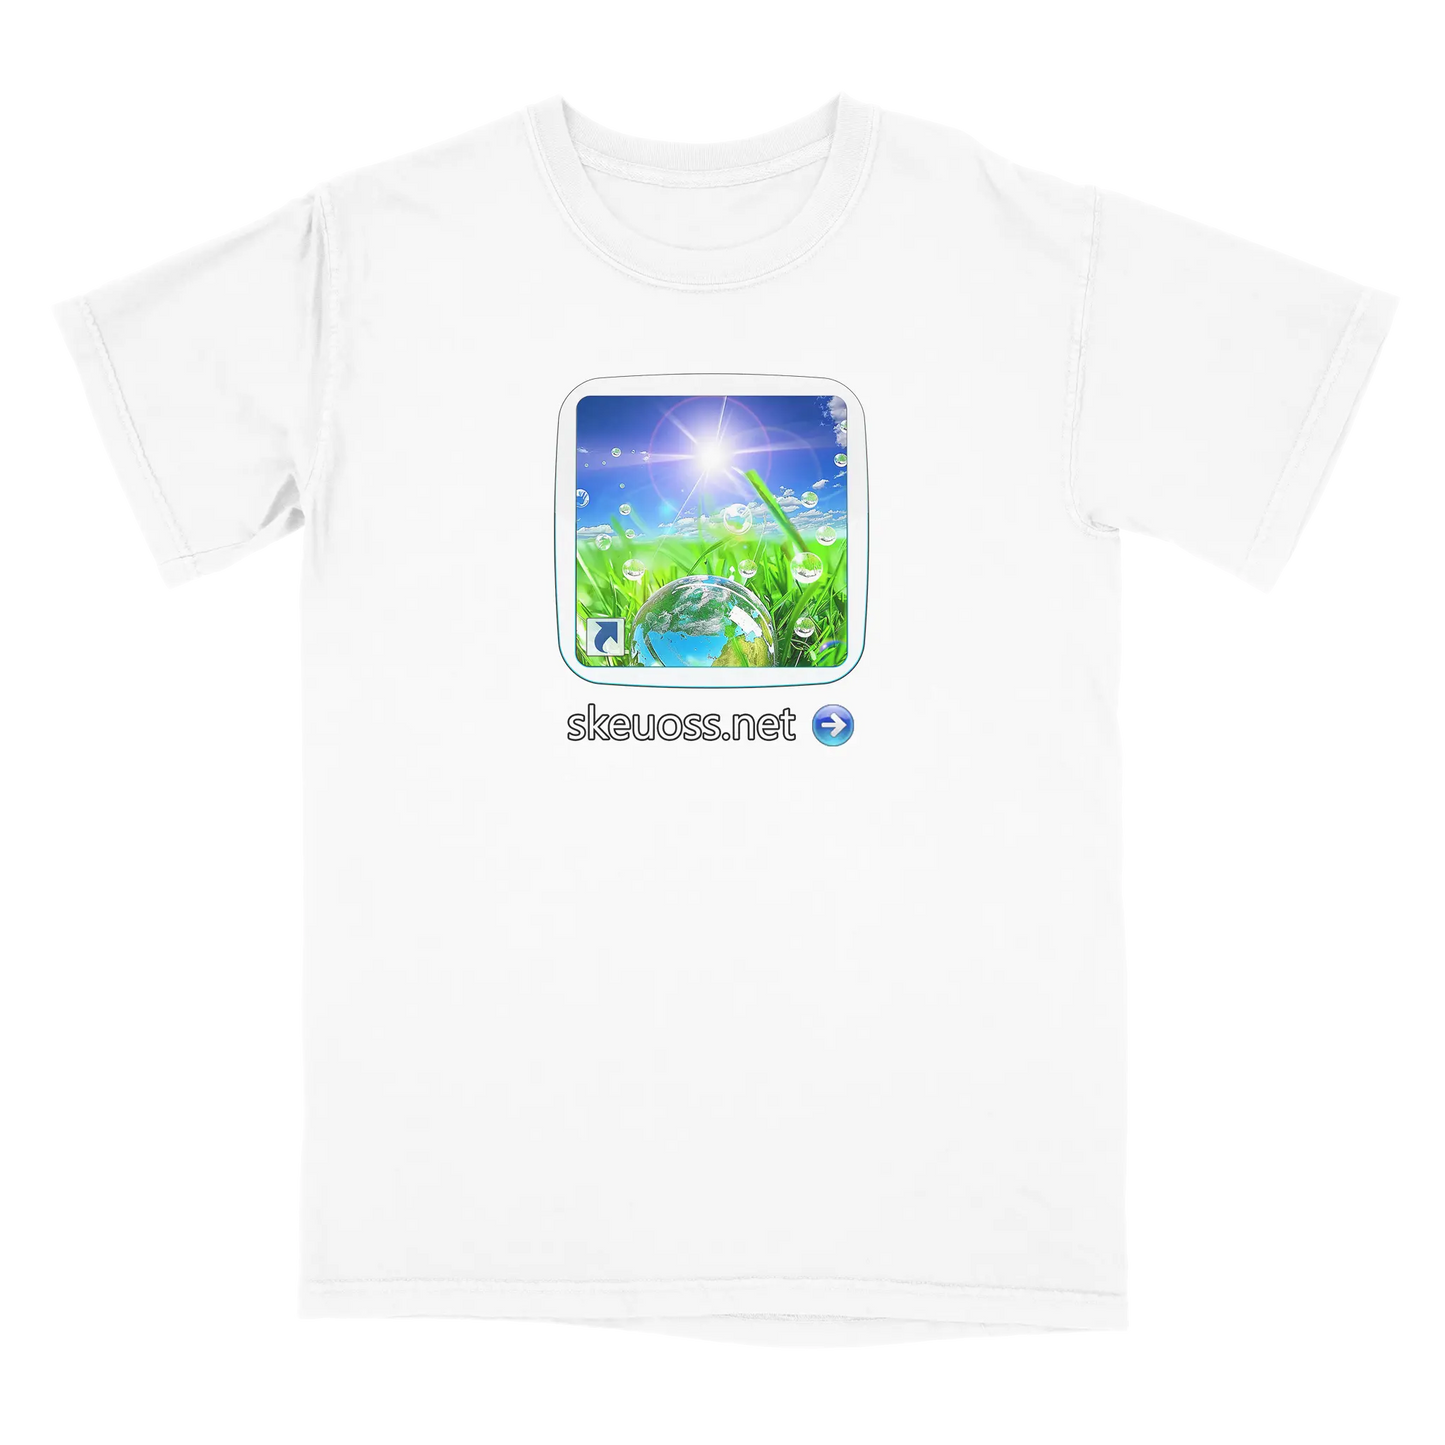 Frutiger Aero T-shirt - User Login Collection - User 262